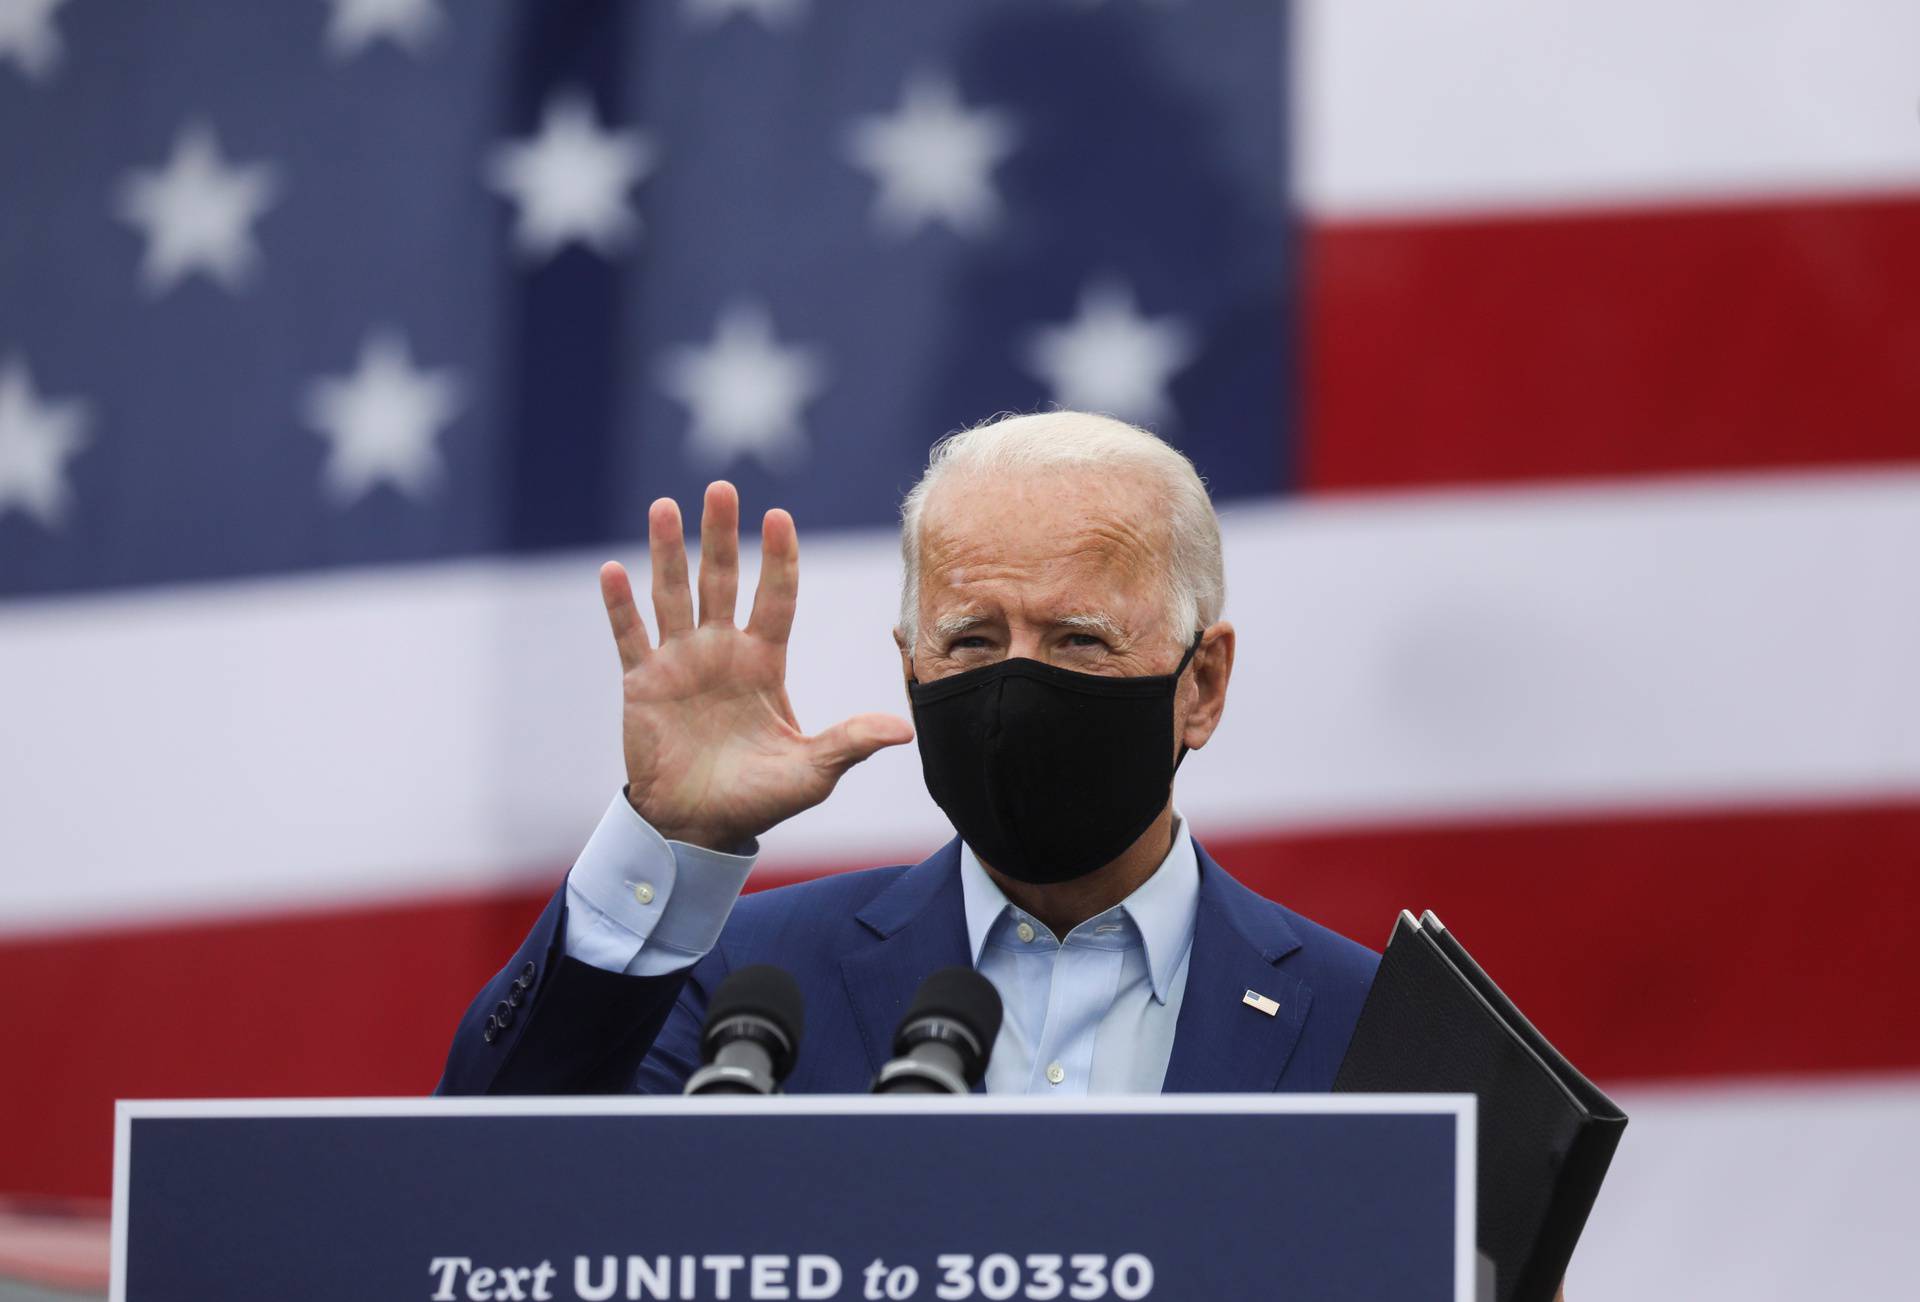 Democratic U.S. presidential nominee Joe Biden campaigns in Warren, Michigan